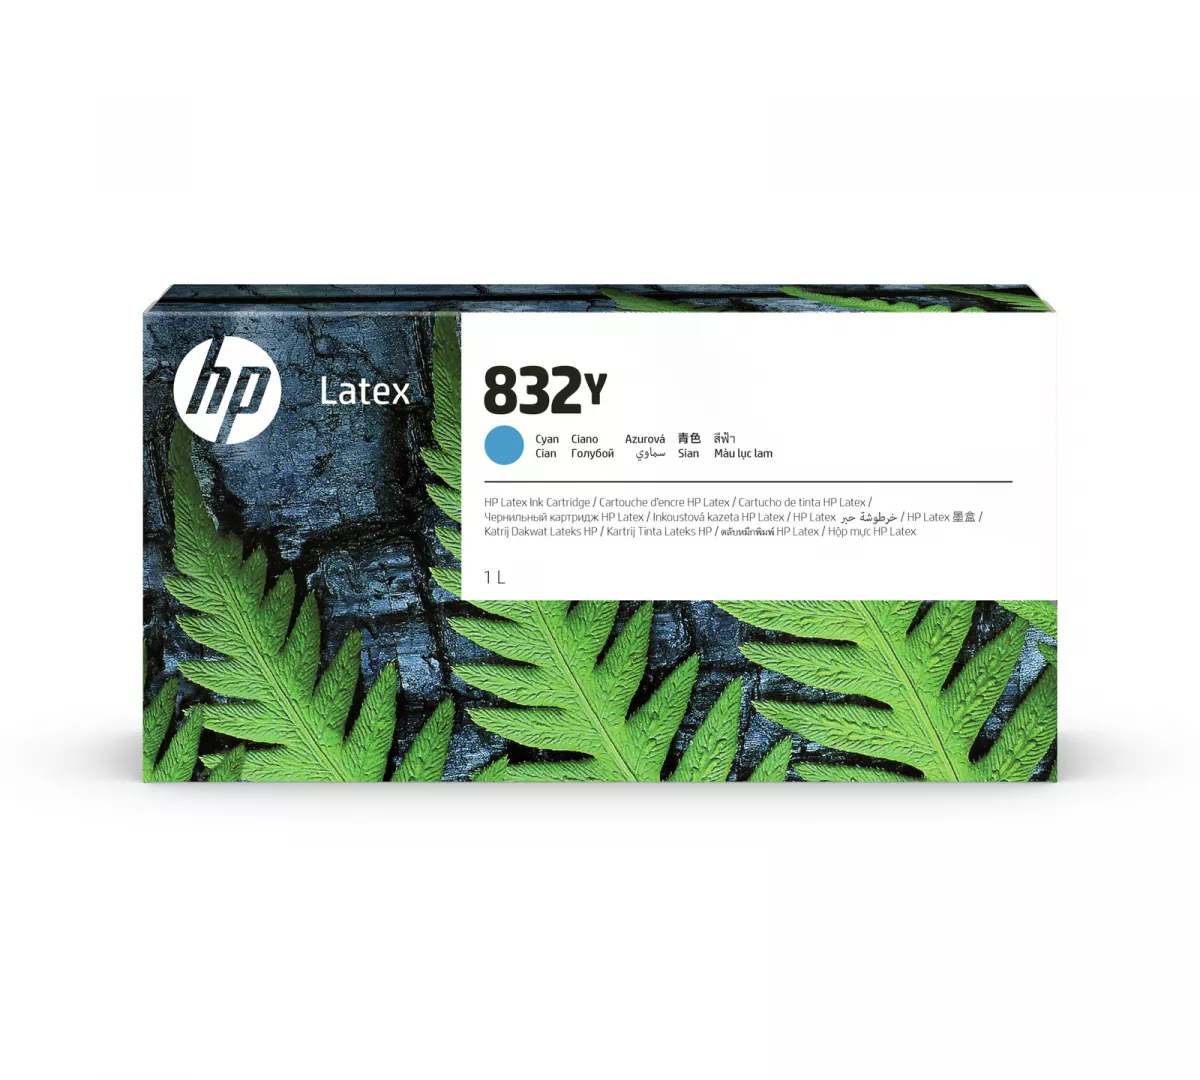 HP 832Y Cyan Latex Ink Cartridge 1 L 1